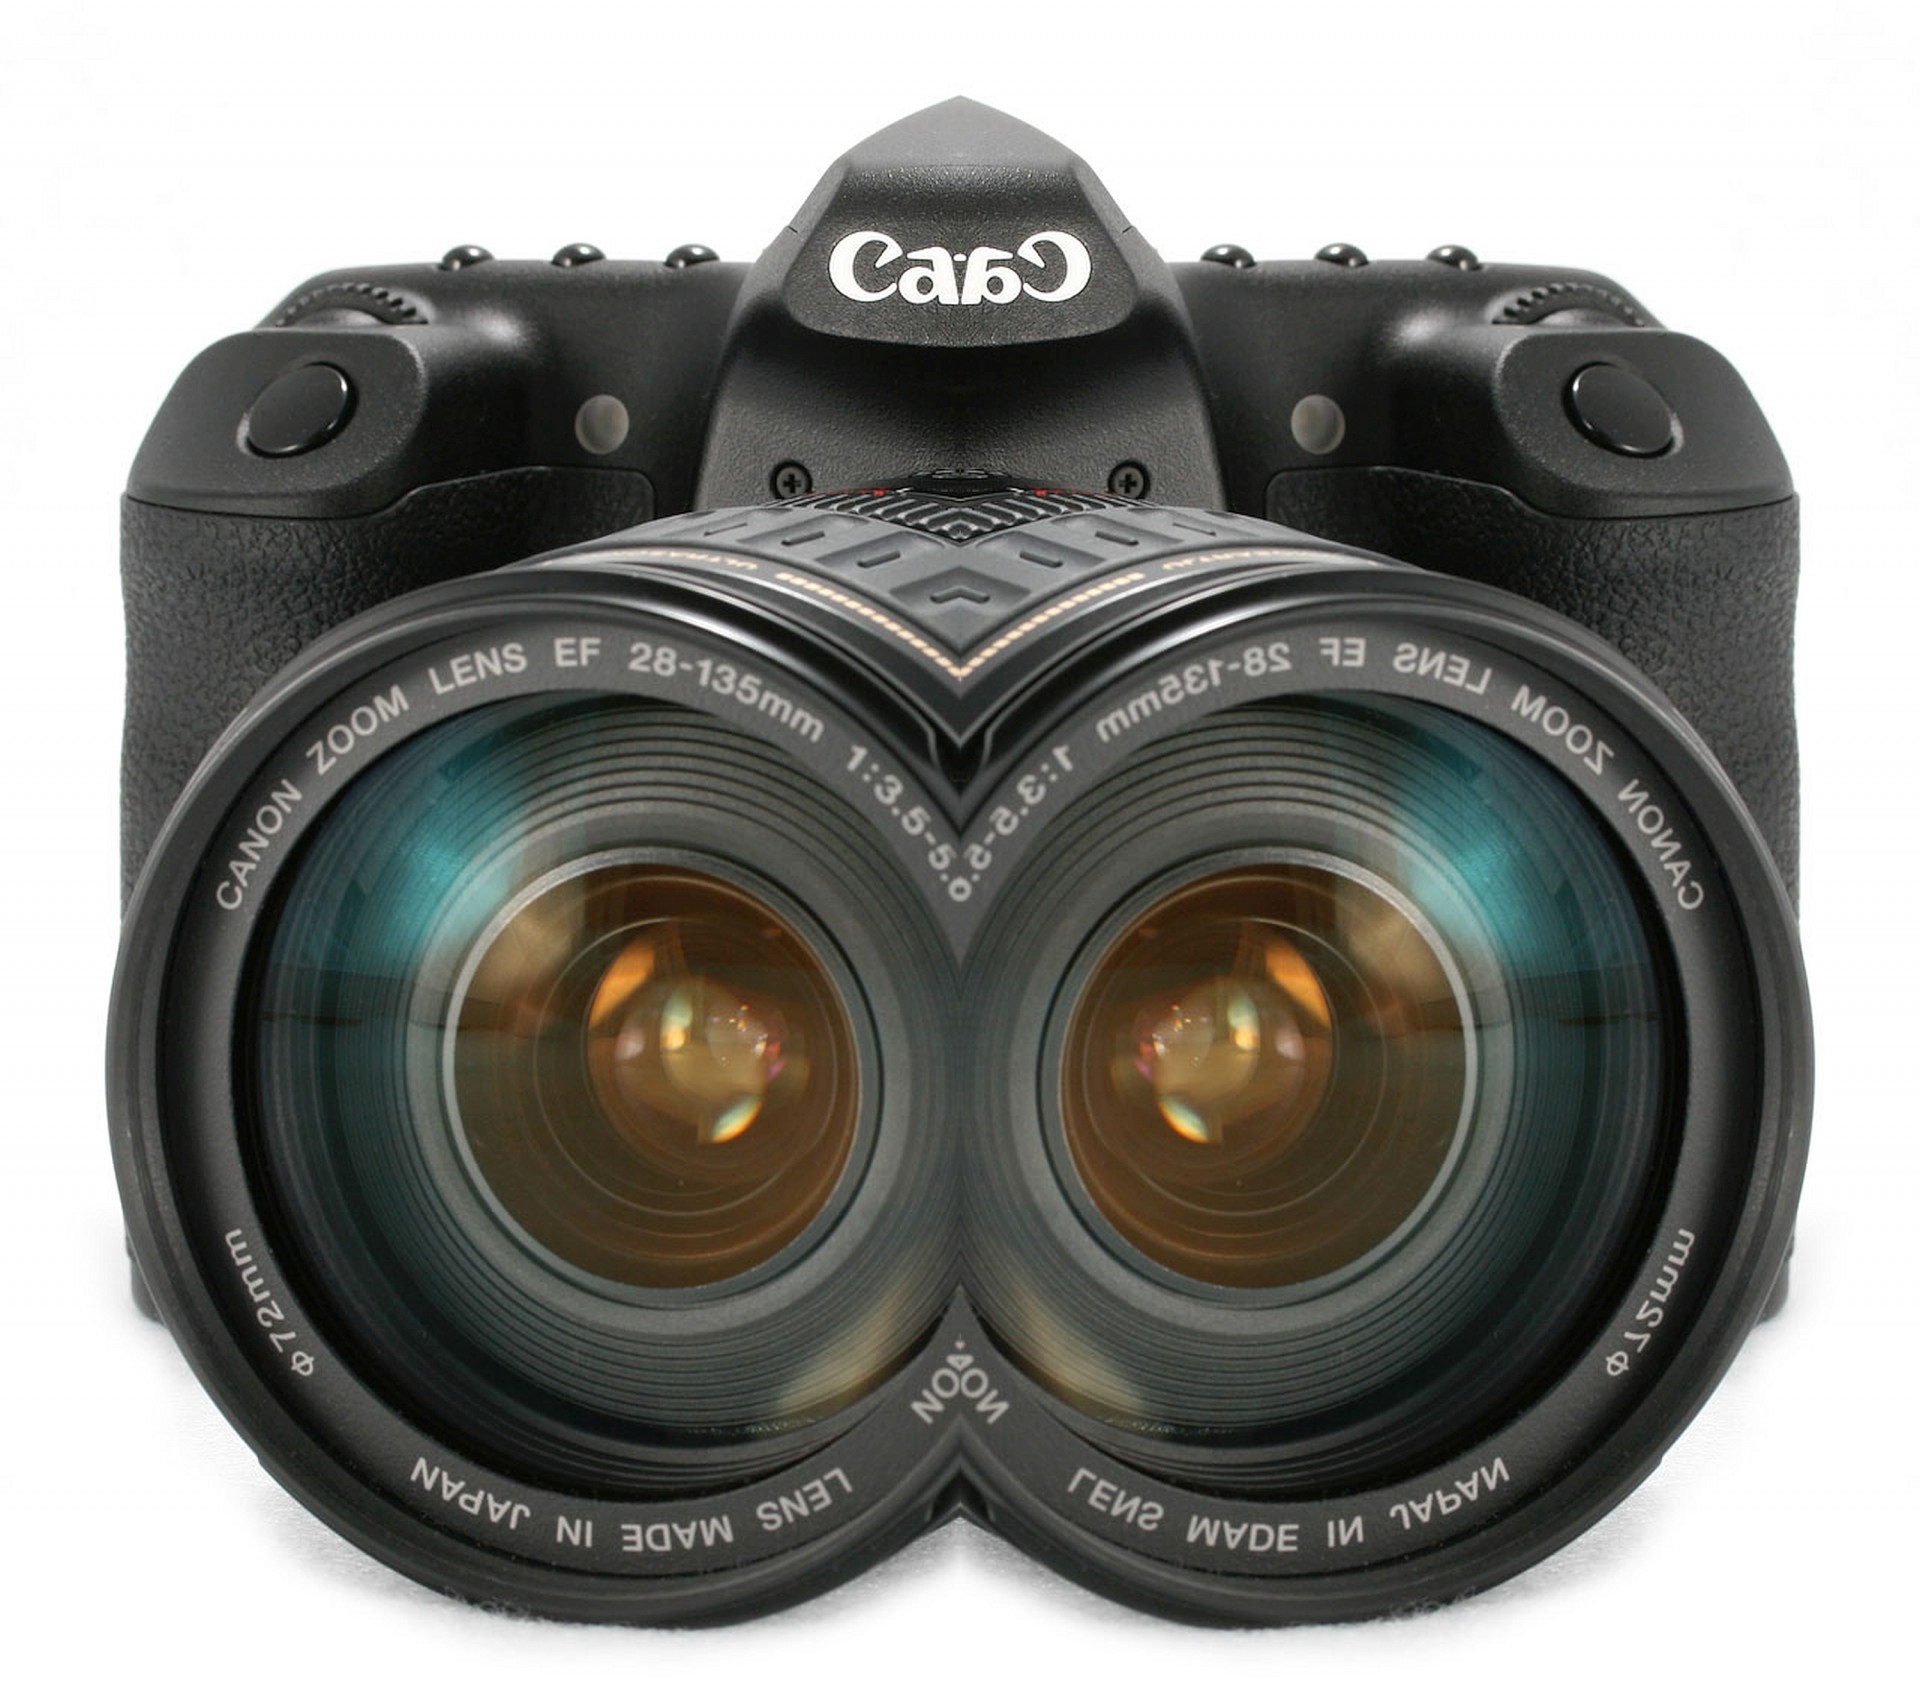 Double Lens Camera